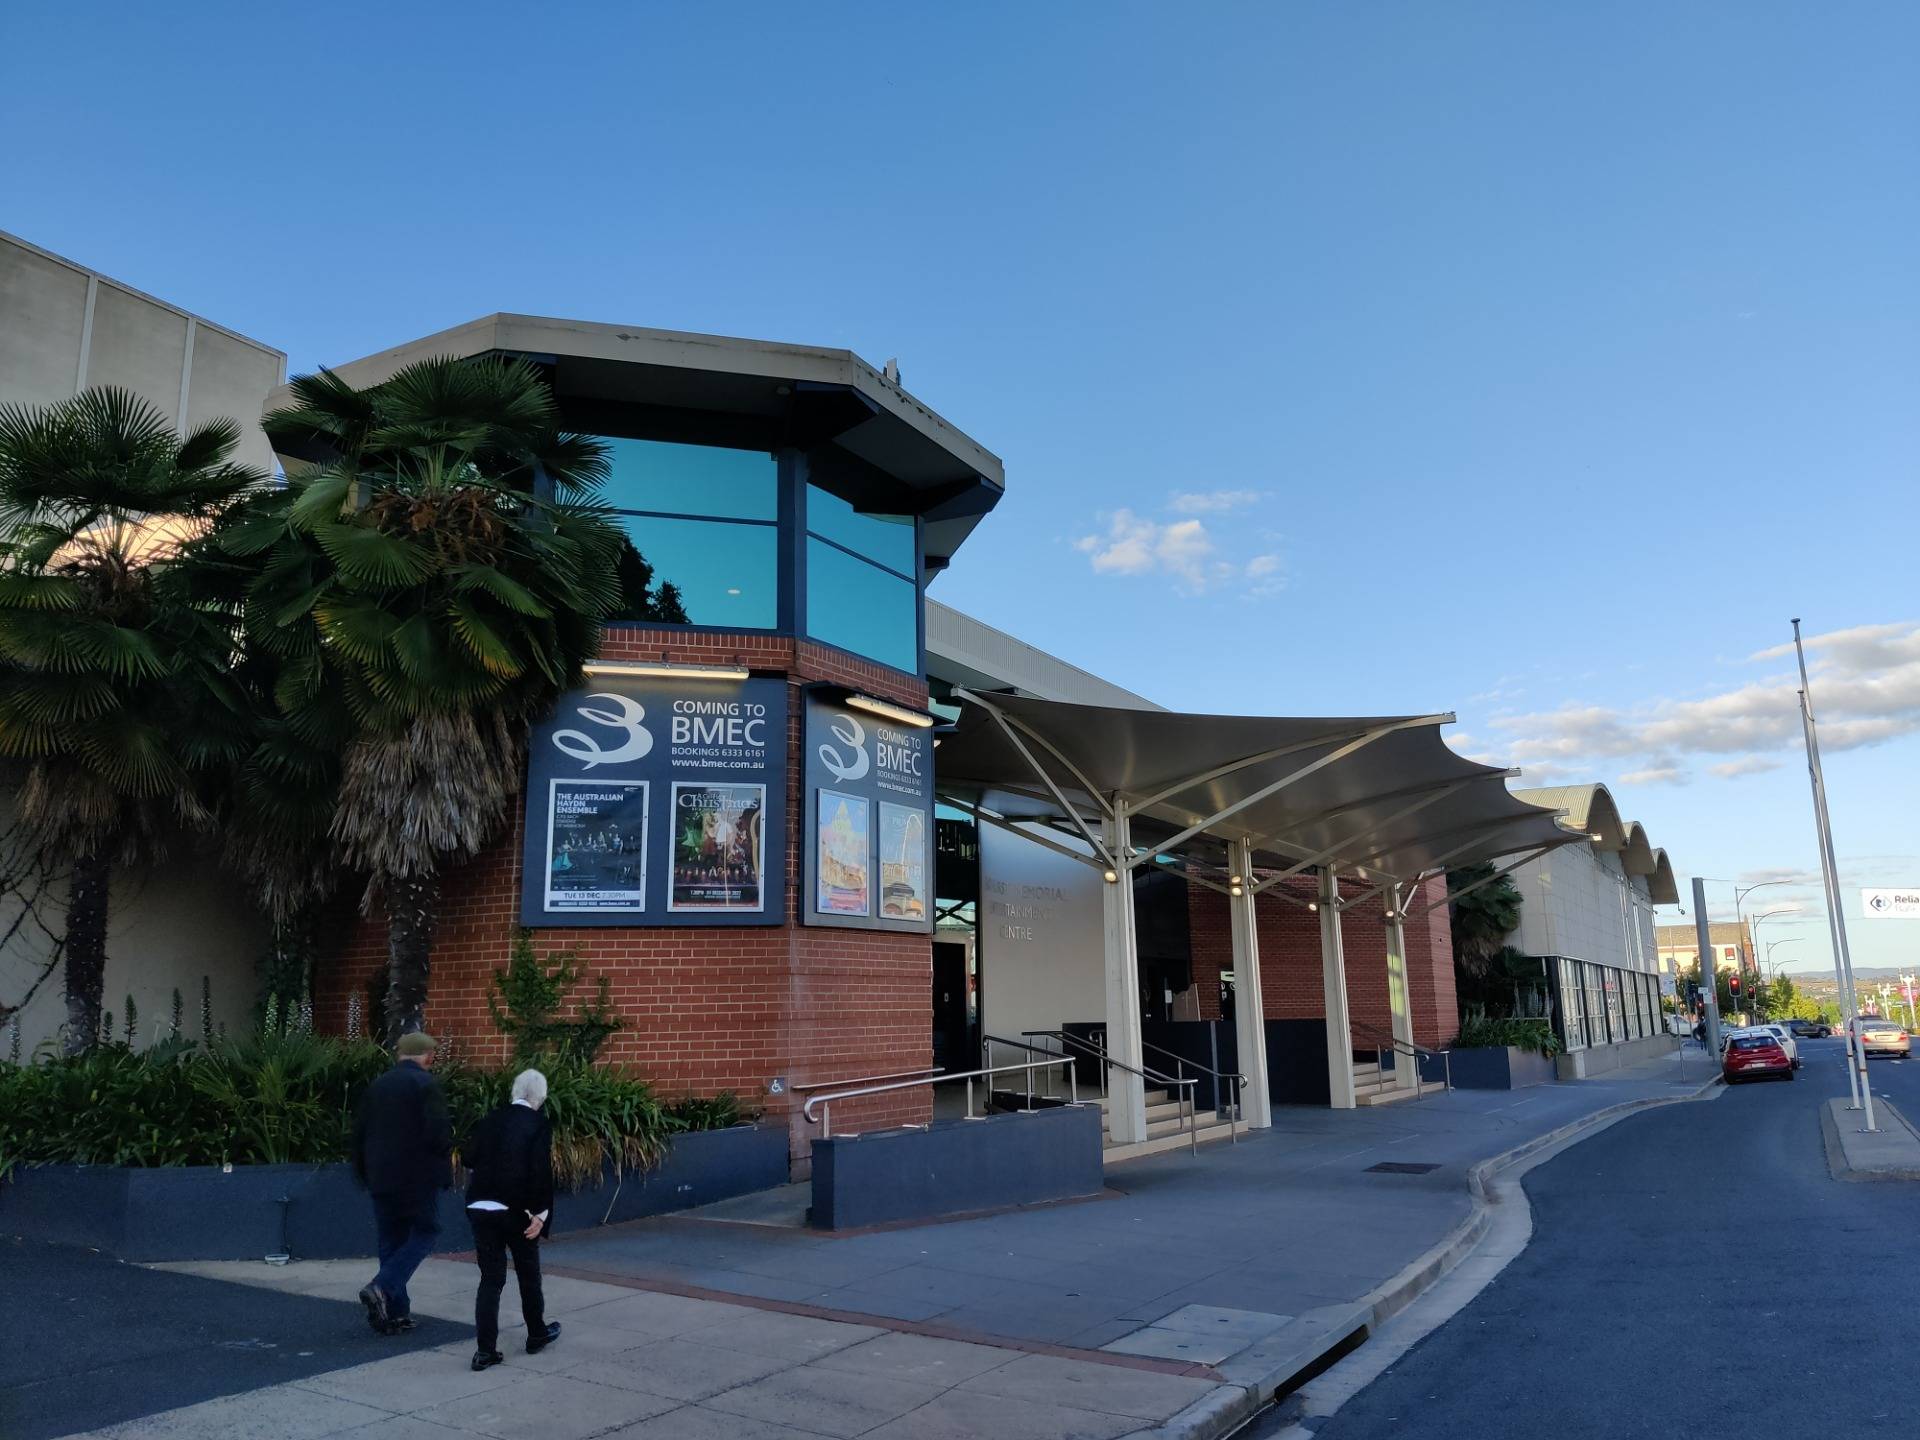 Bathurst Memorial Entertainment Centre: Bathurst, AUSTRALIA